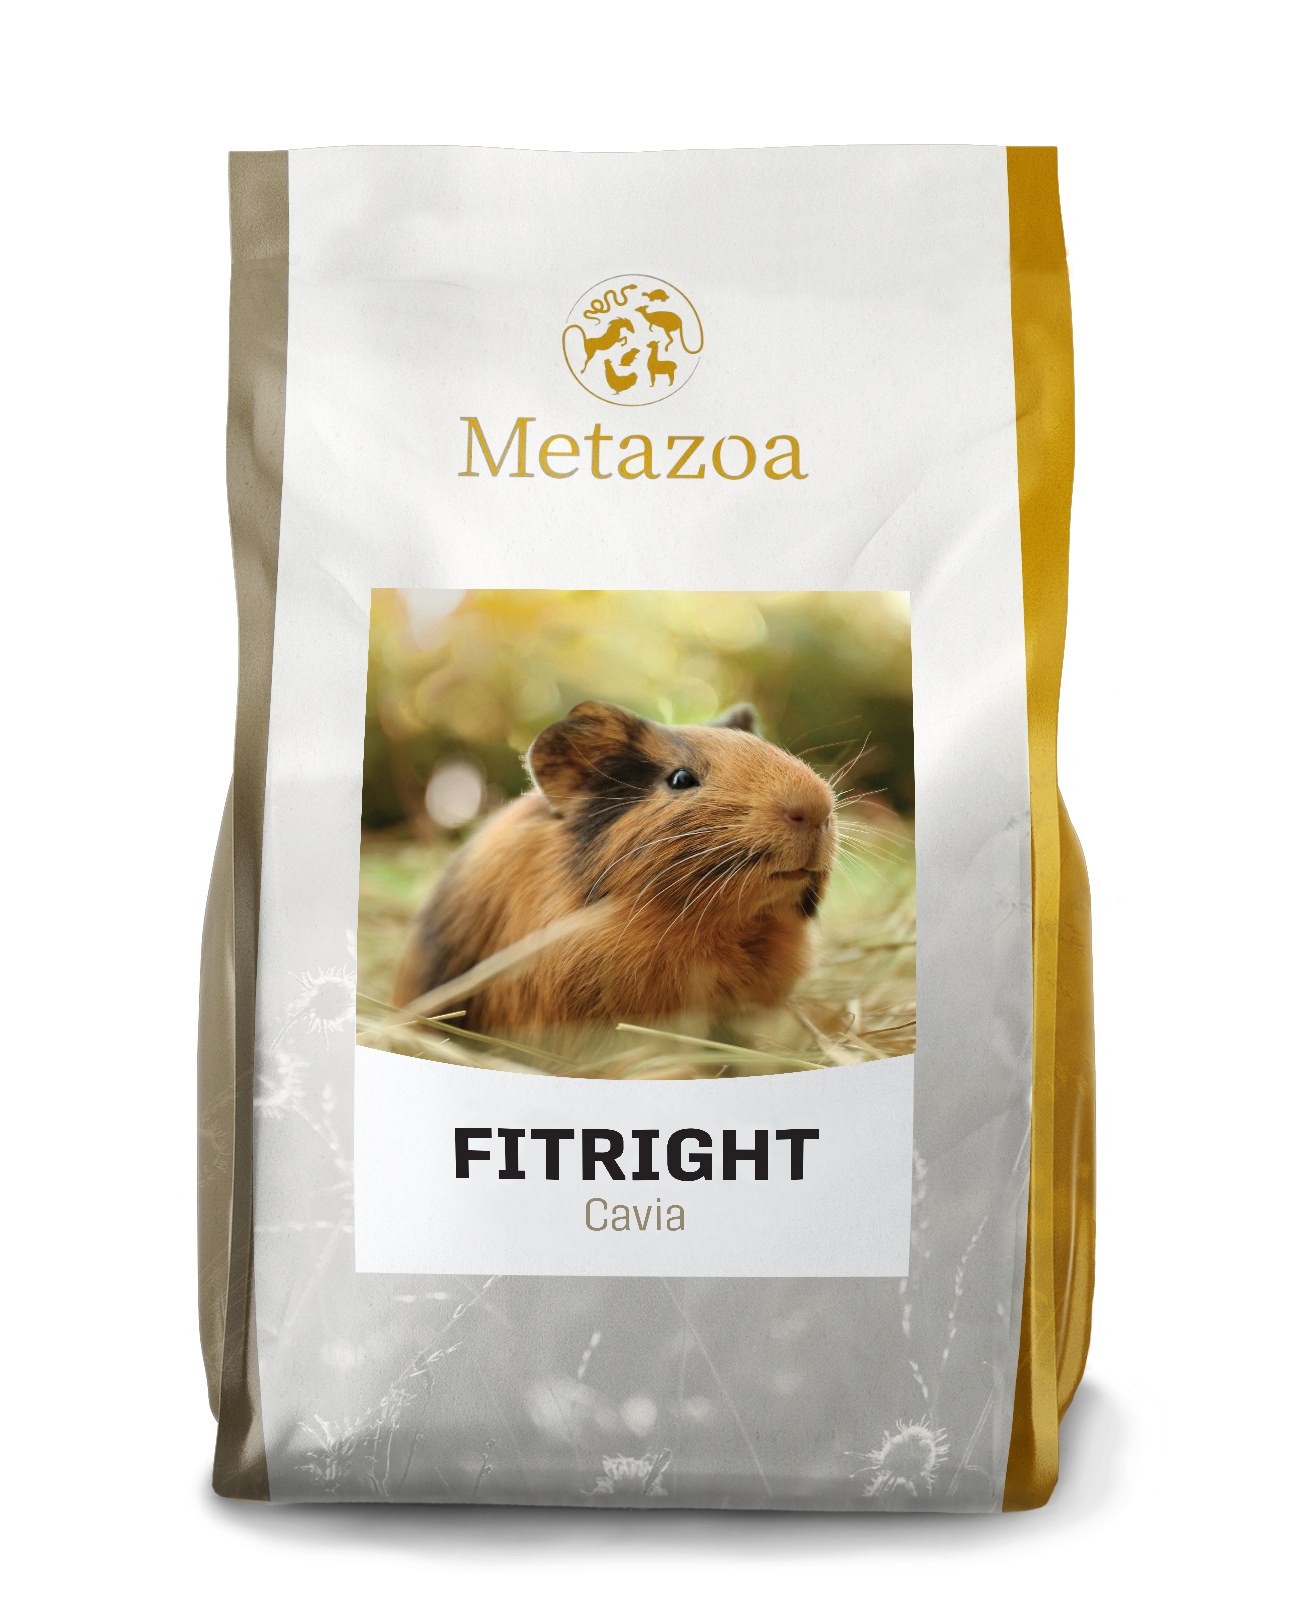 Download Metazoa Verpakking Exotic Fitright cavia 4 kg EAN 4260176355335